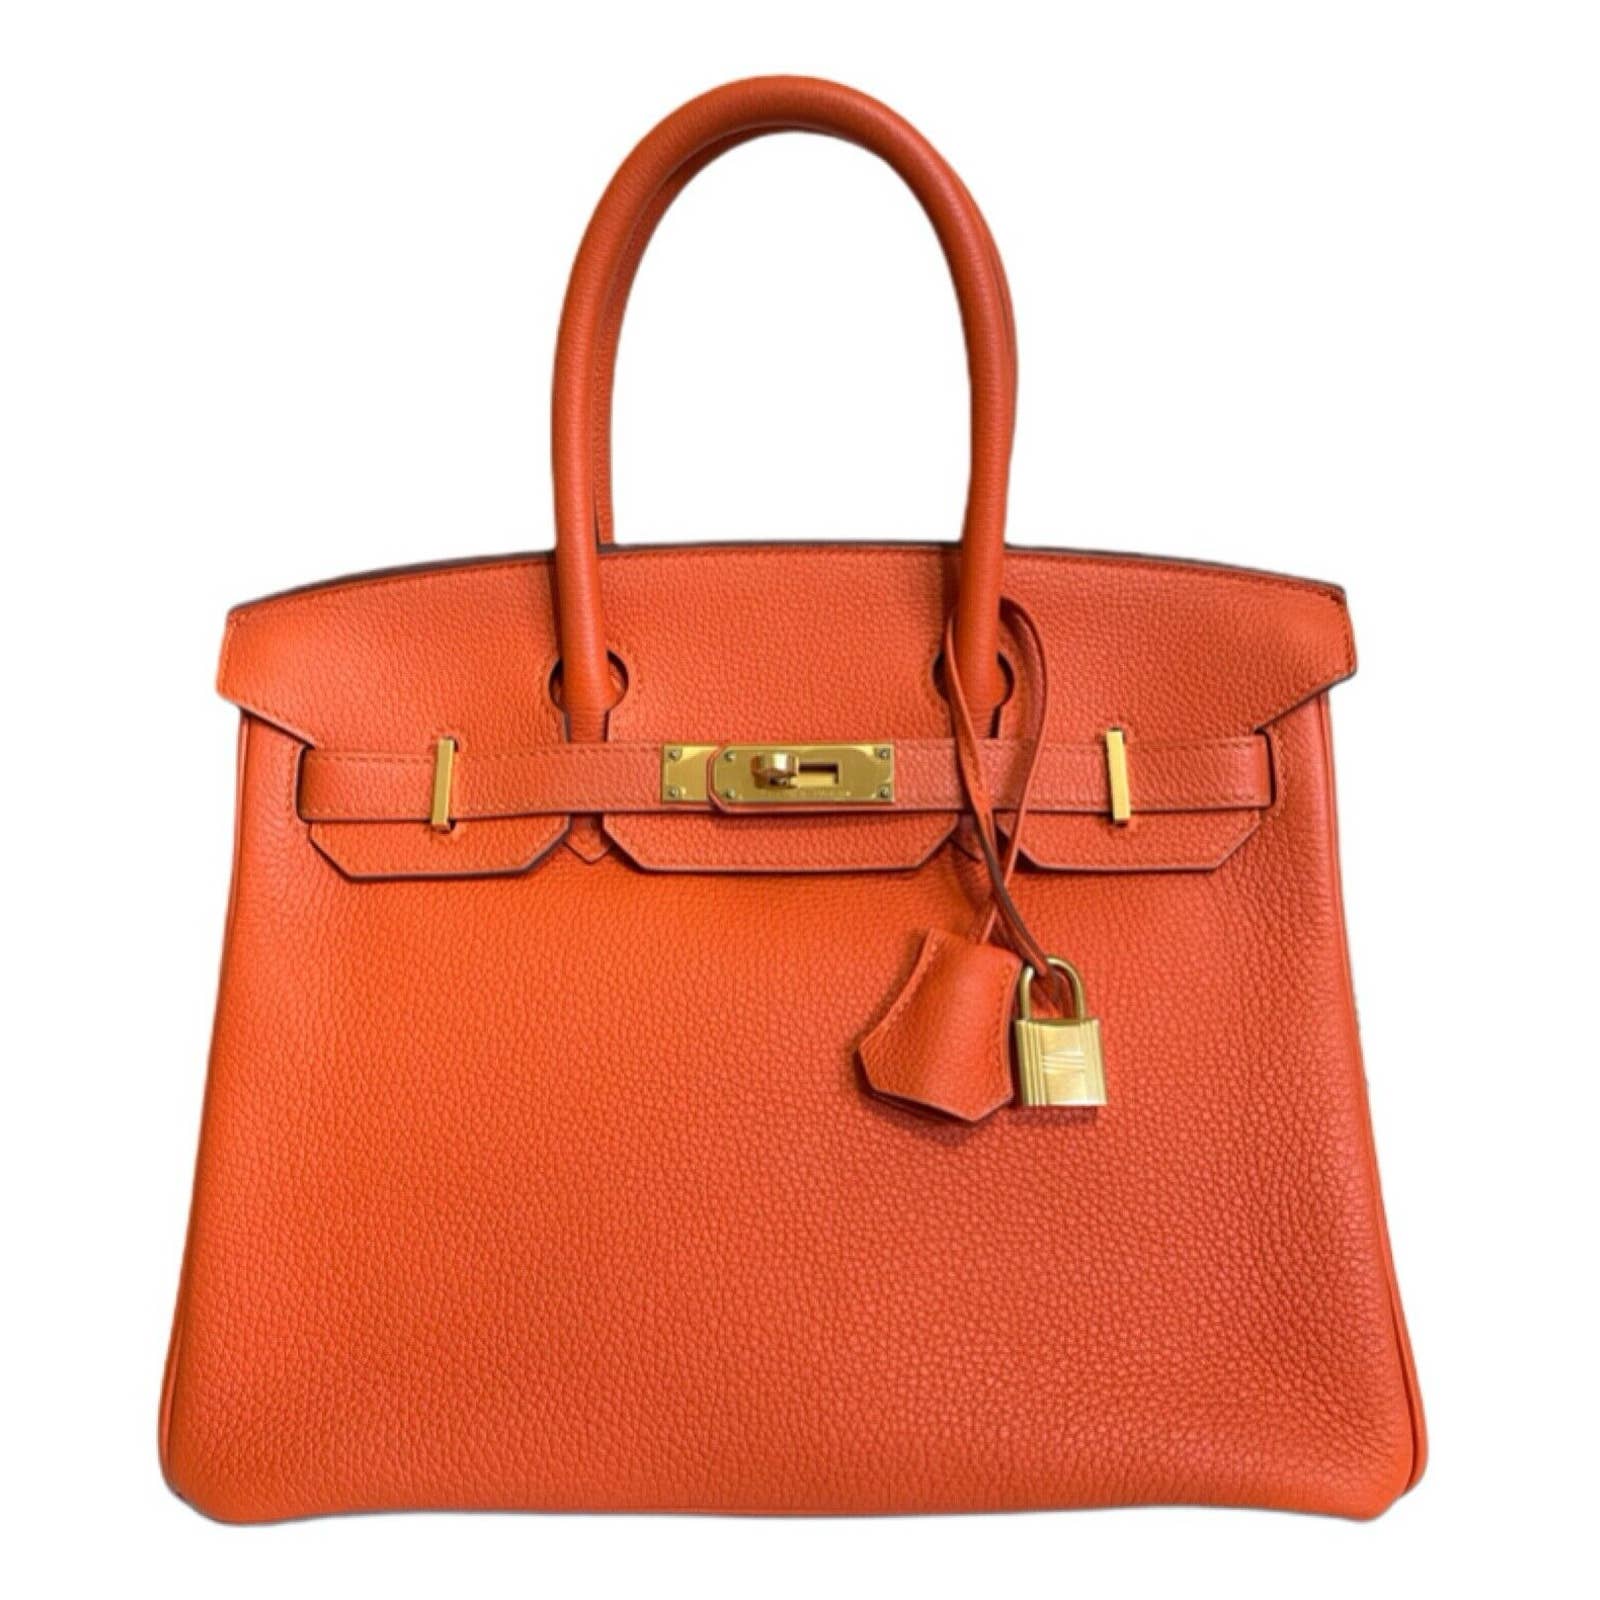 Hermes Women's Birkin Togo 30 Leather Bag